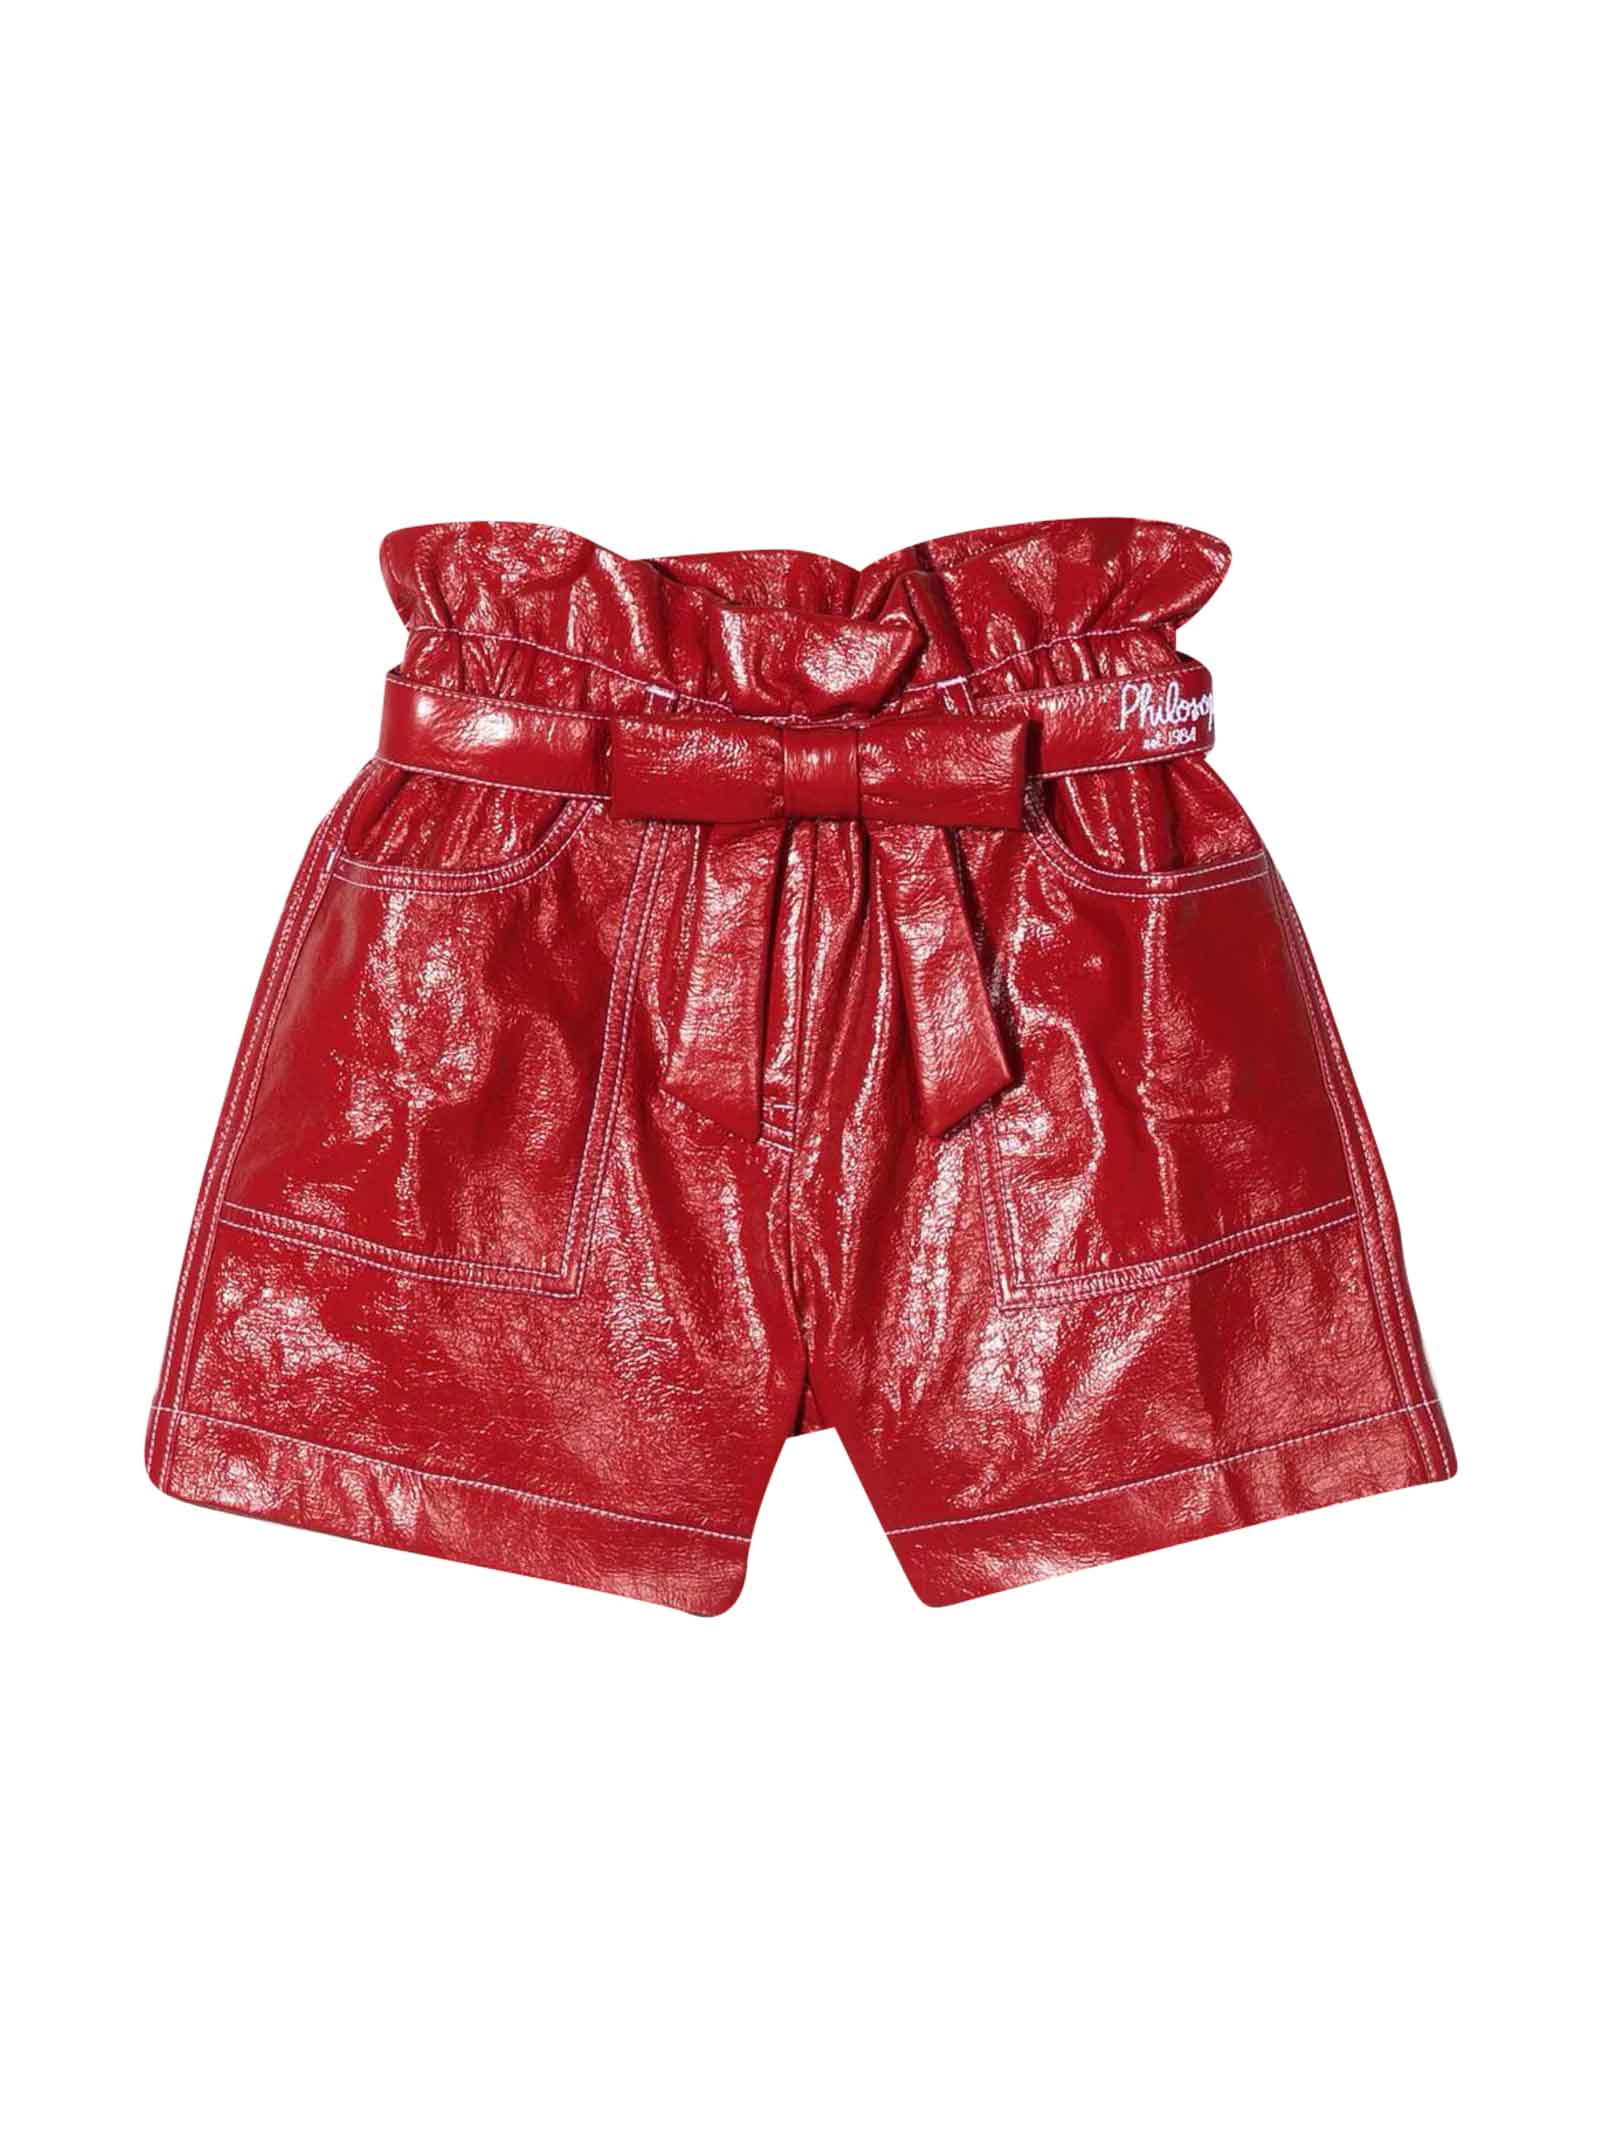 Philosophy di Lorenzo Serafini Kids Red Shorts Girl